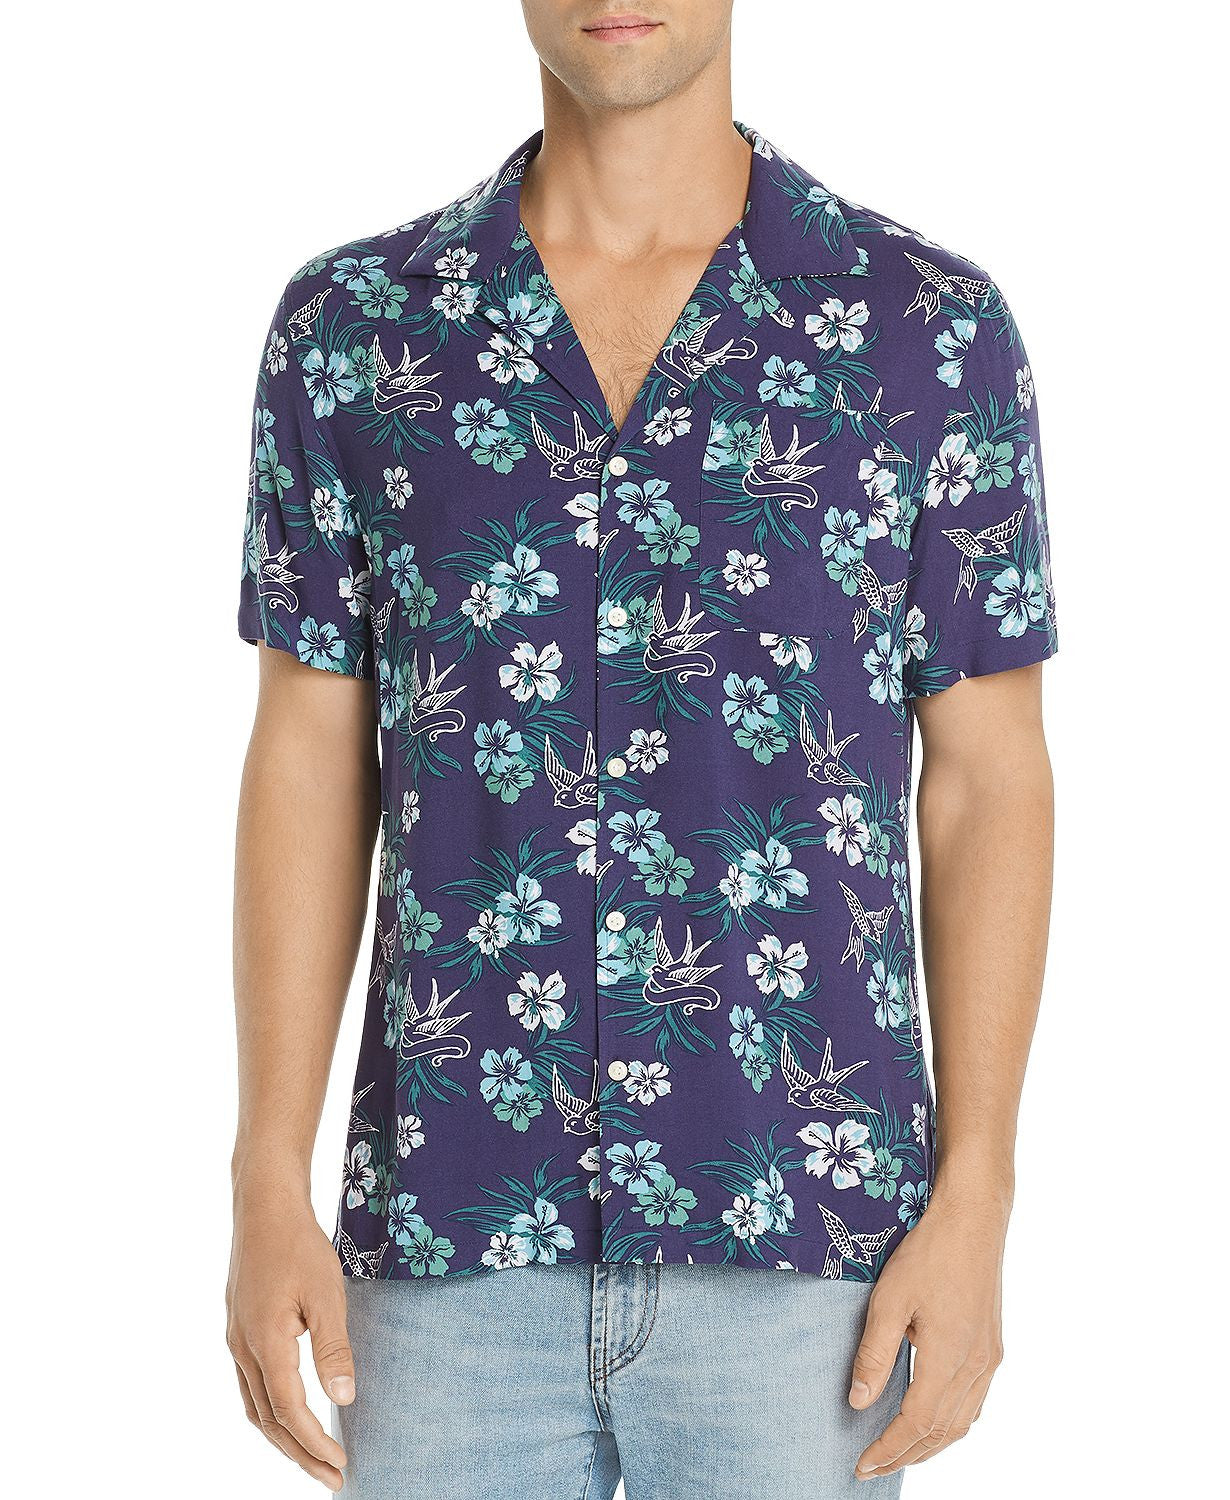 Jachs Ny Short-sleeve Floral-print Classic Fit Shirt Navy